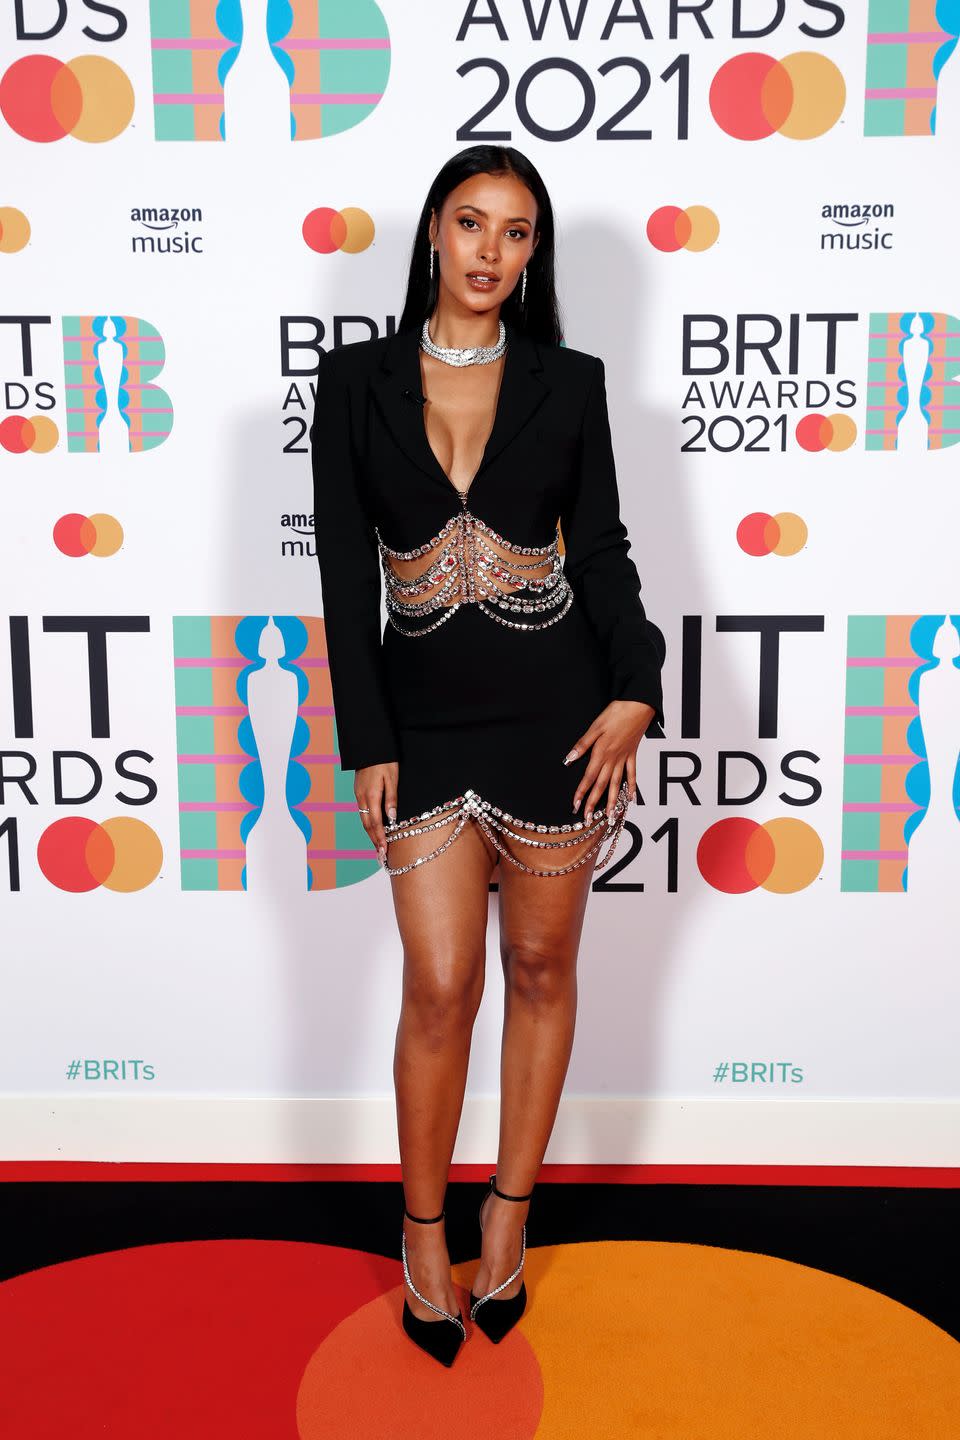 2021 BRIT Awards: Best Dressed - Maya Jama